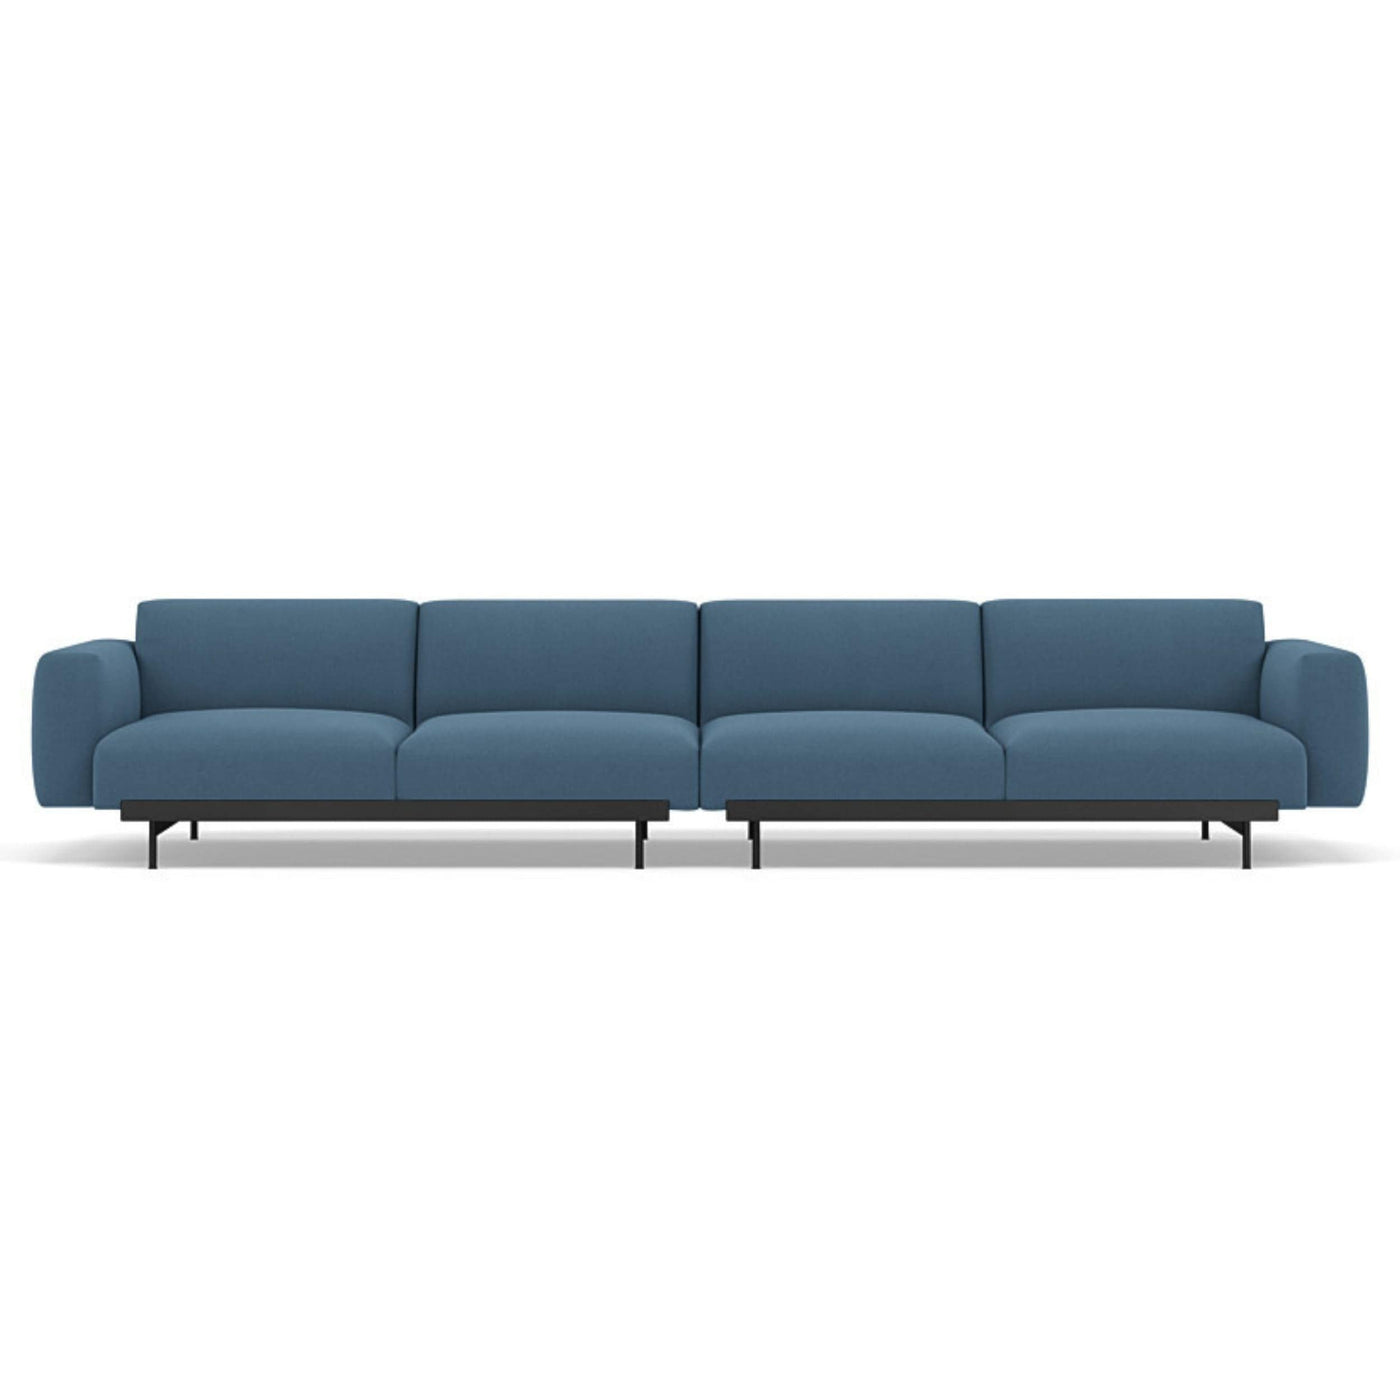 Muuto In Situ Modular 4 Seater Sofa configuration 1 in vidar 733. Made to order from someday designs. #colour_vidar-733